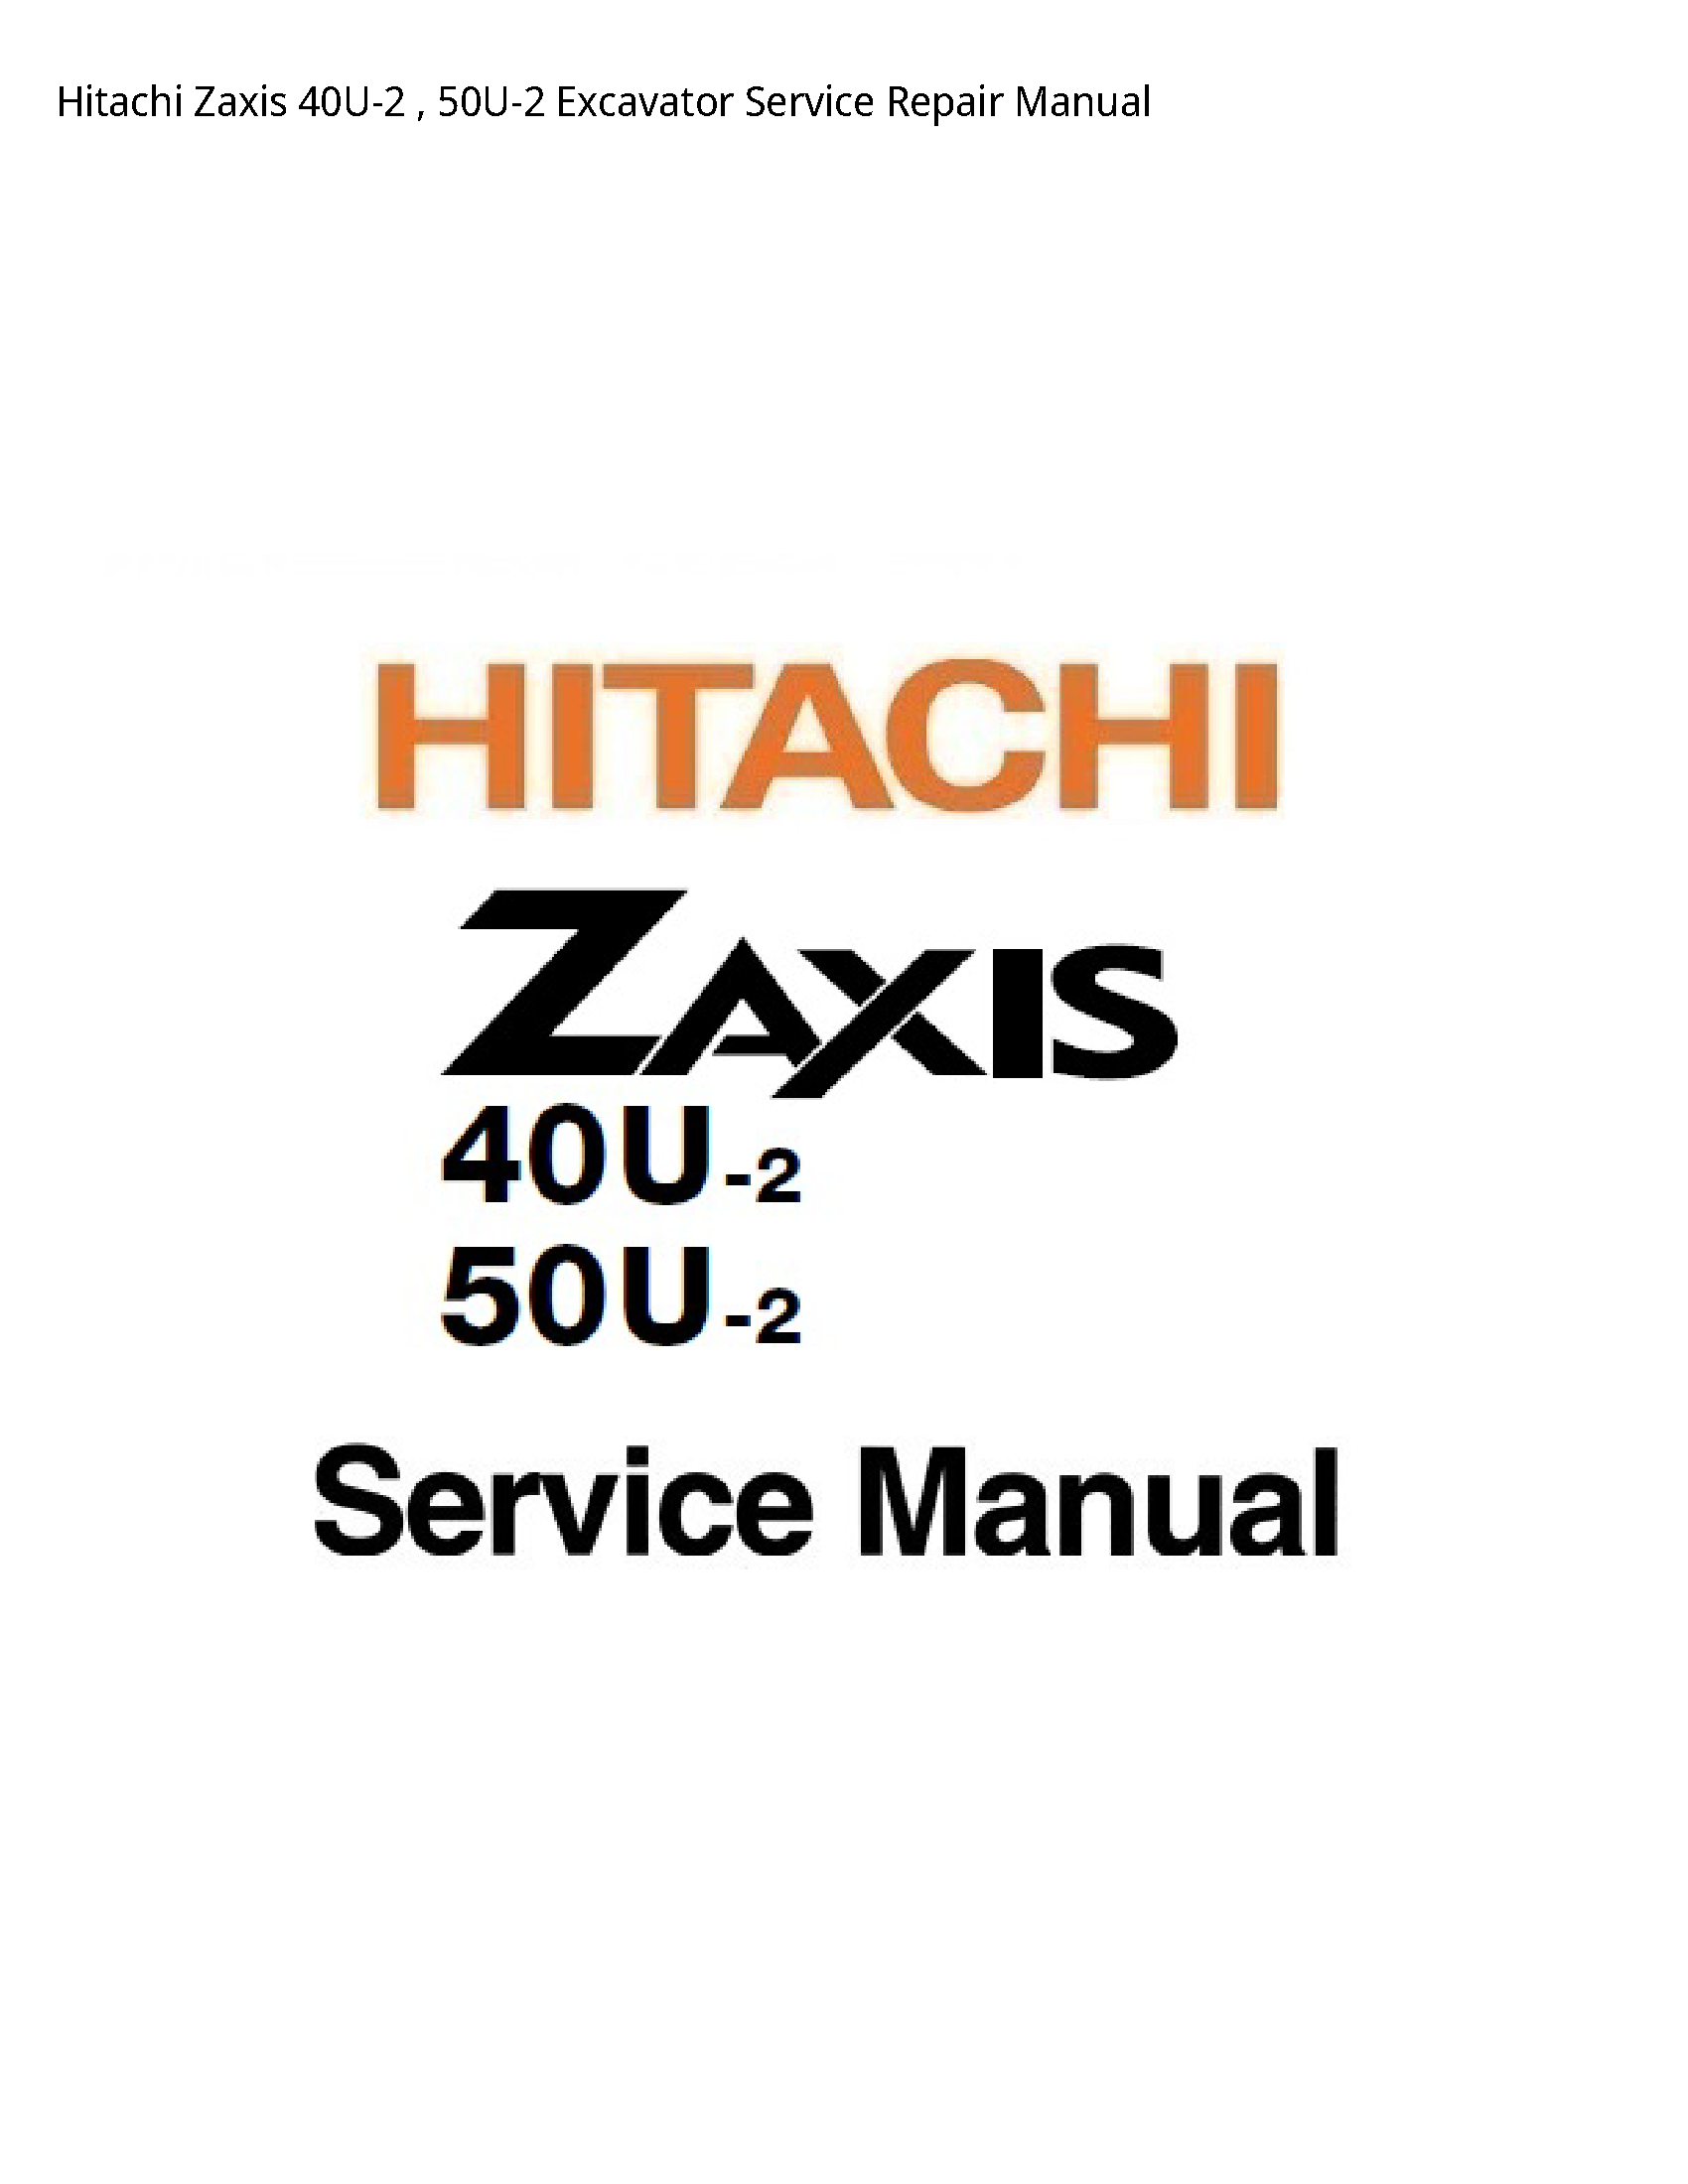 Hitachi 40U-2 Zaxis Excavator manual